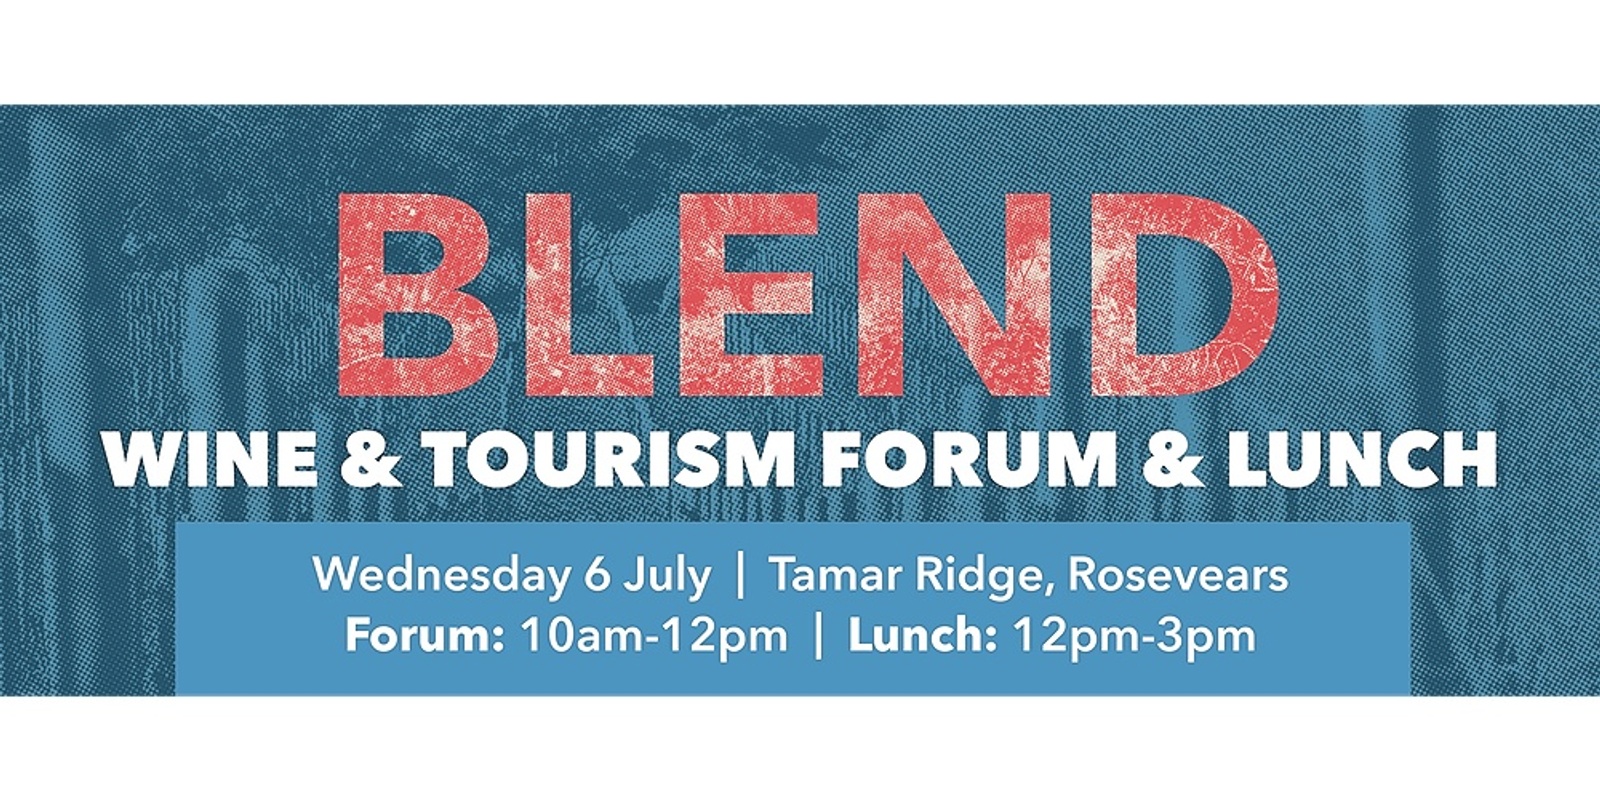 Banner image for BLEND Wine + Tourism